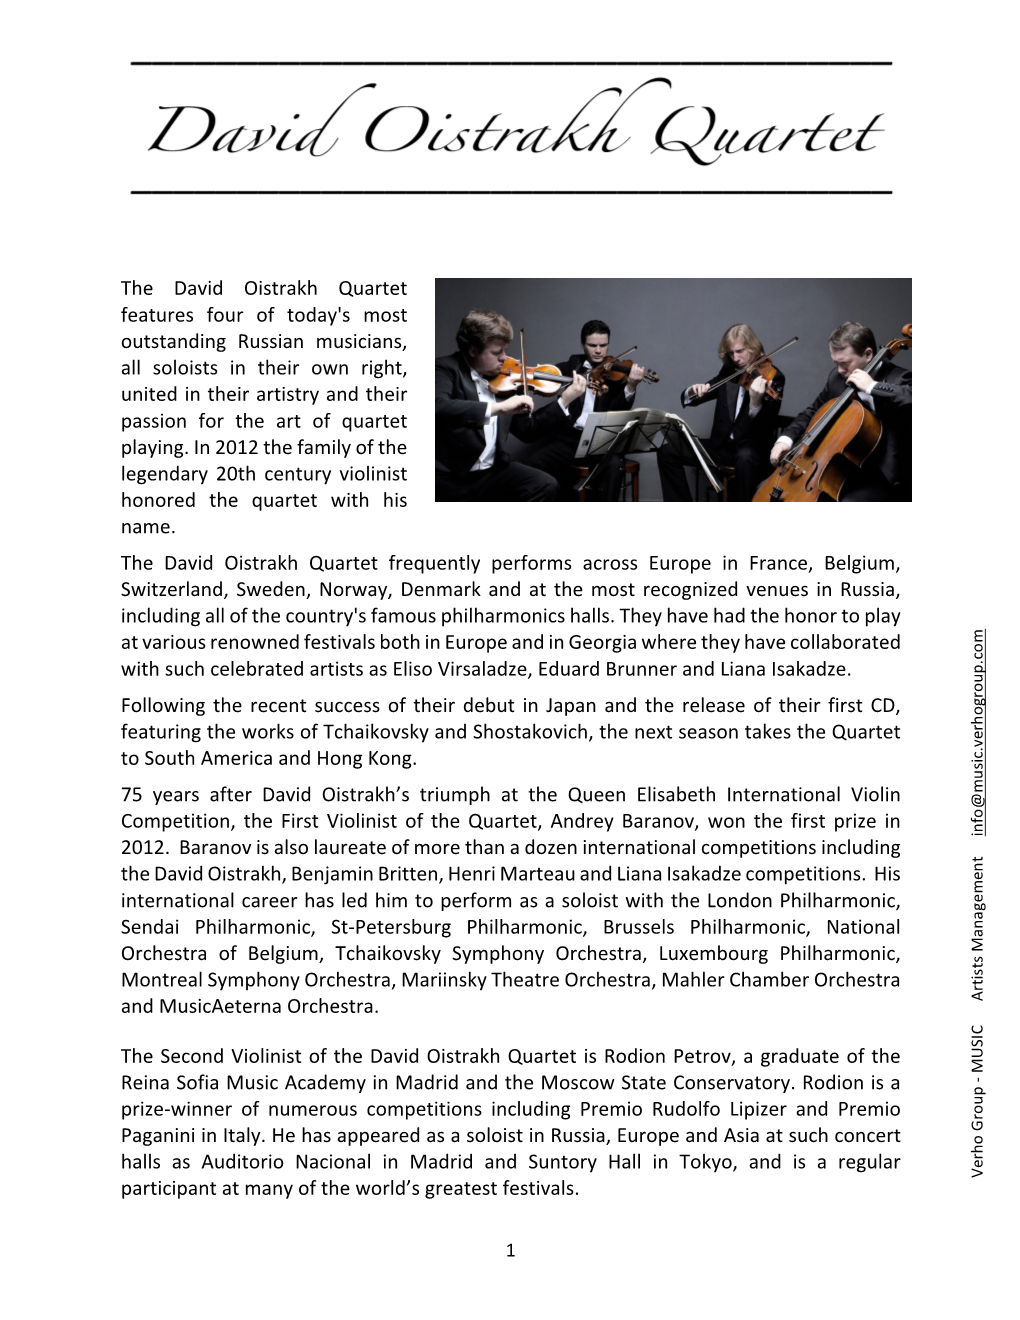 The David Oistrakh Quartet Features Four Of